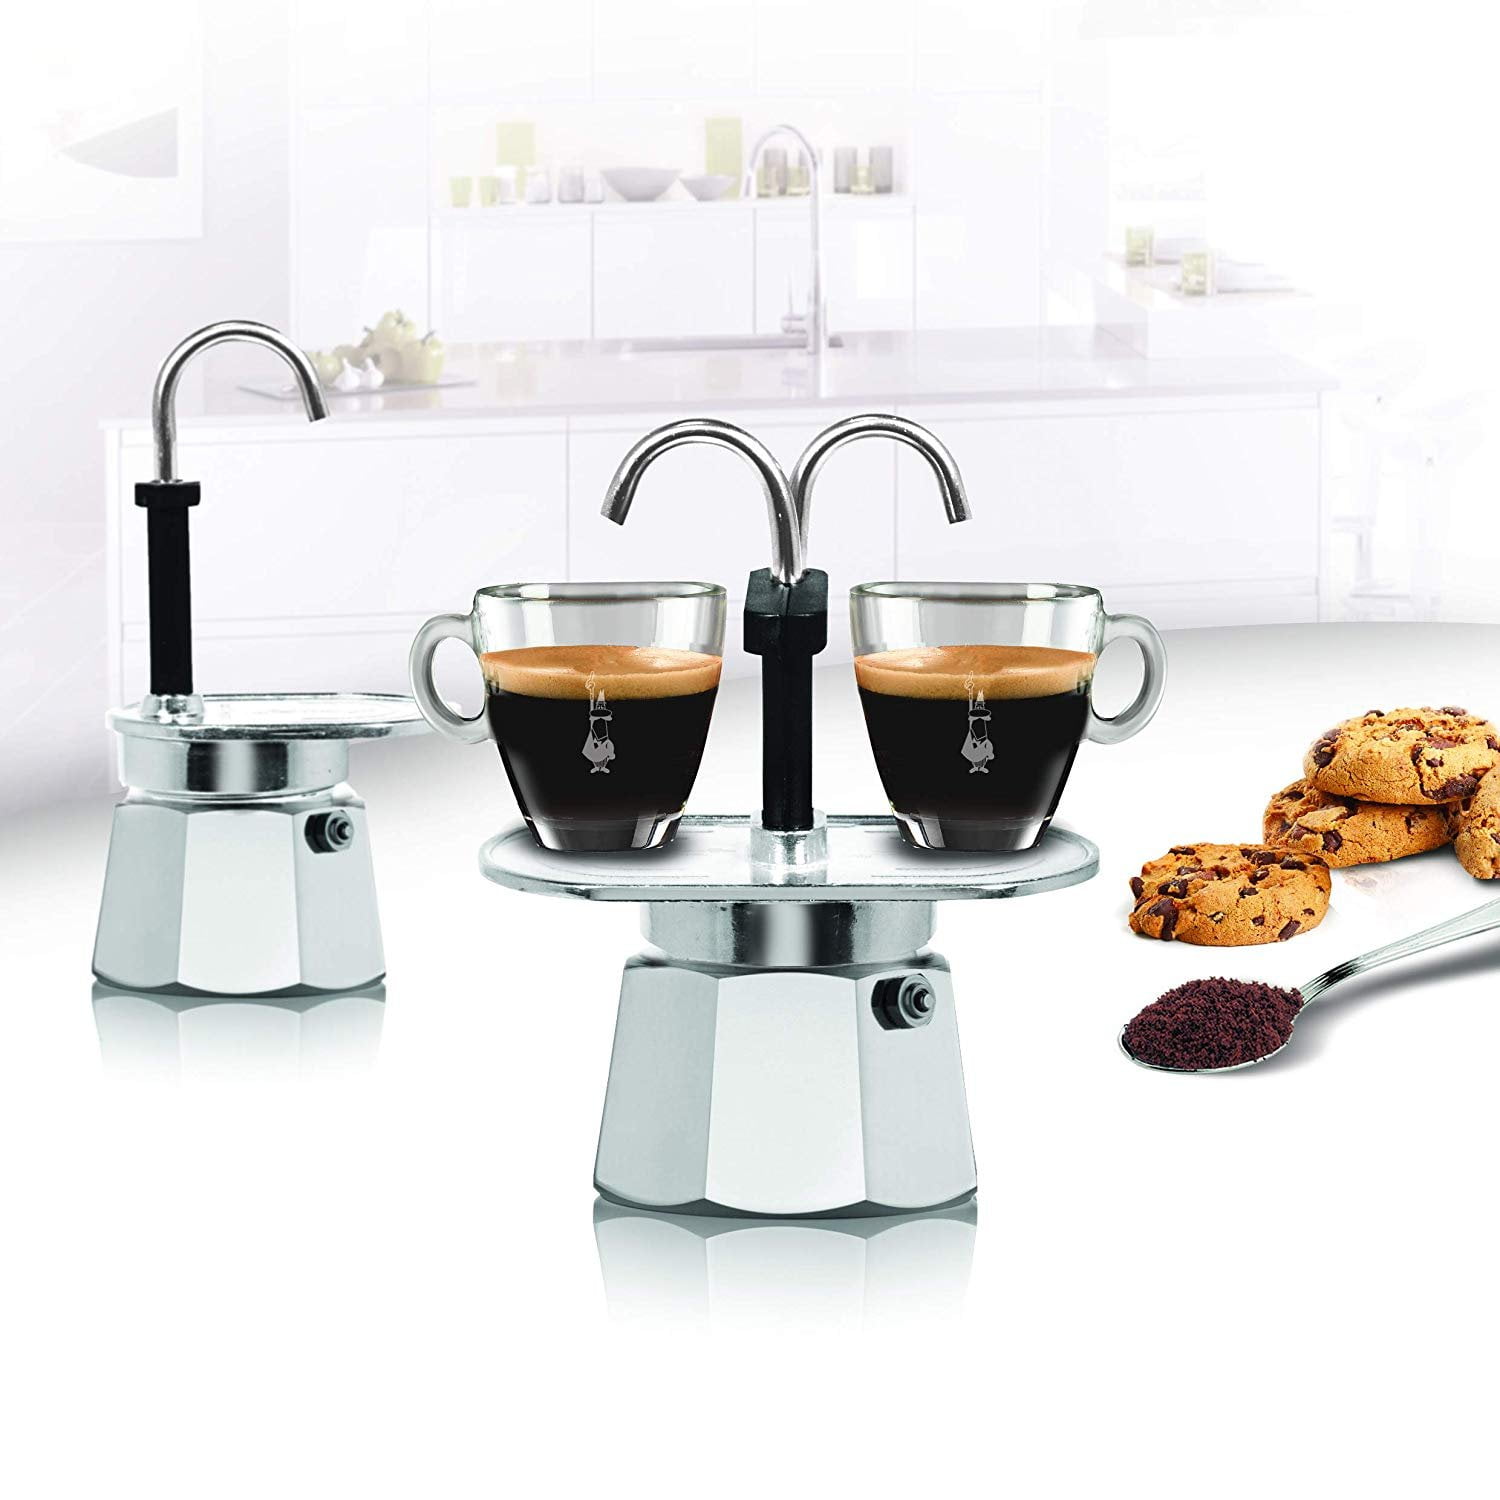 Mini express espresso maker - 2 cups 1 Unit Bialetti